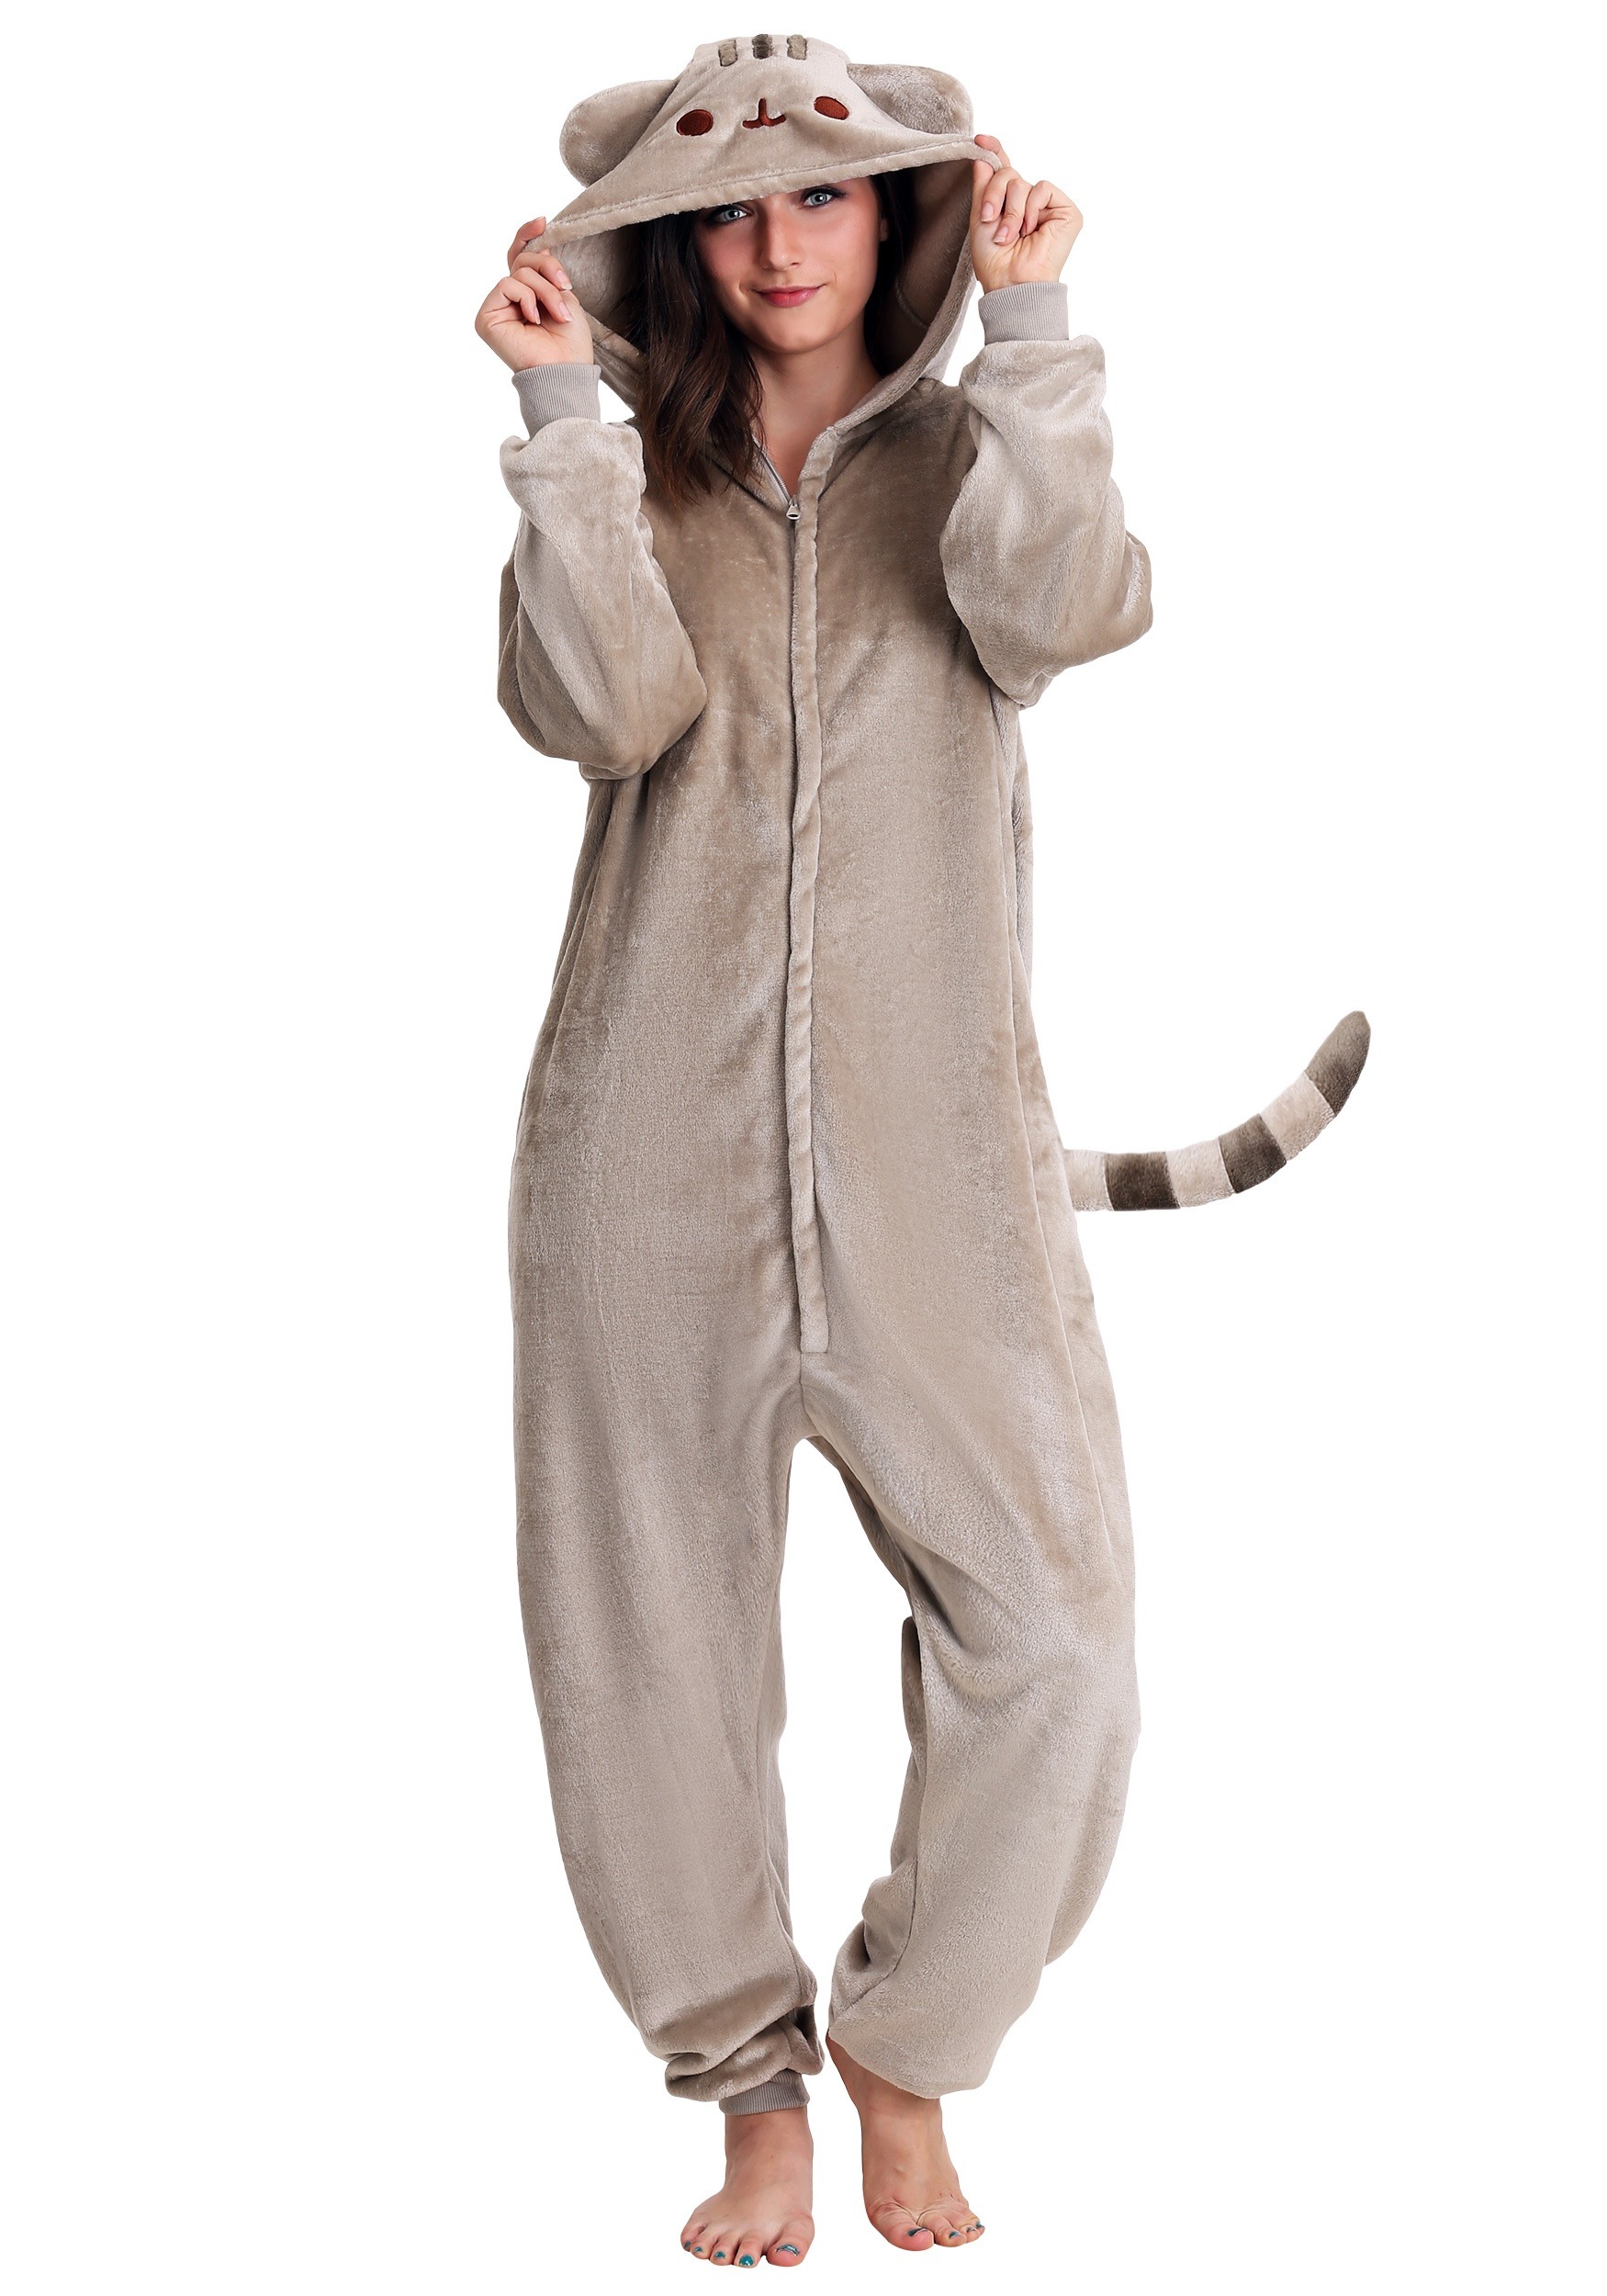 Pusheen Cat Kigurumi Costume for Adults